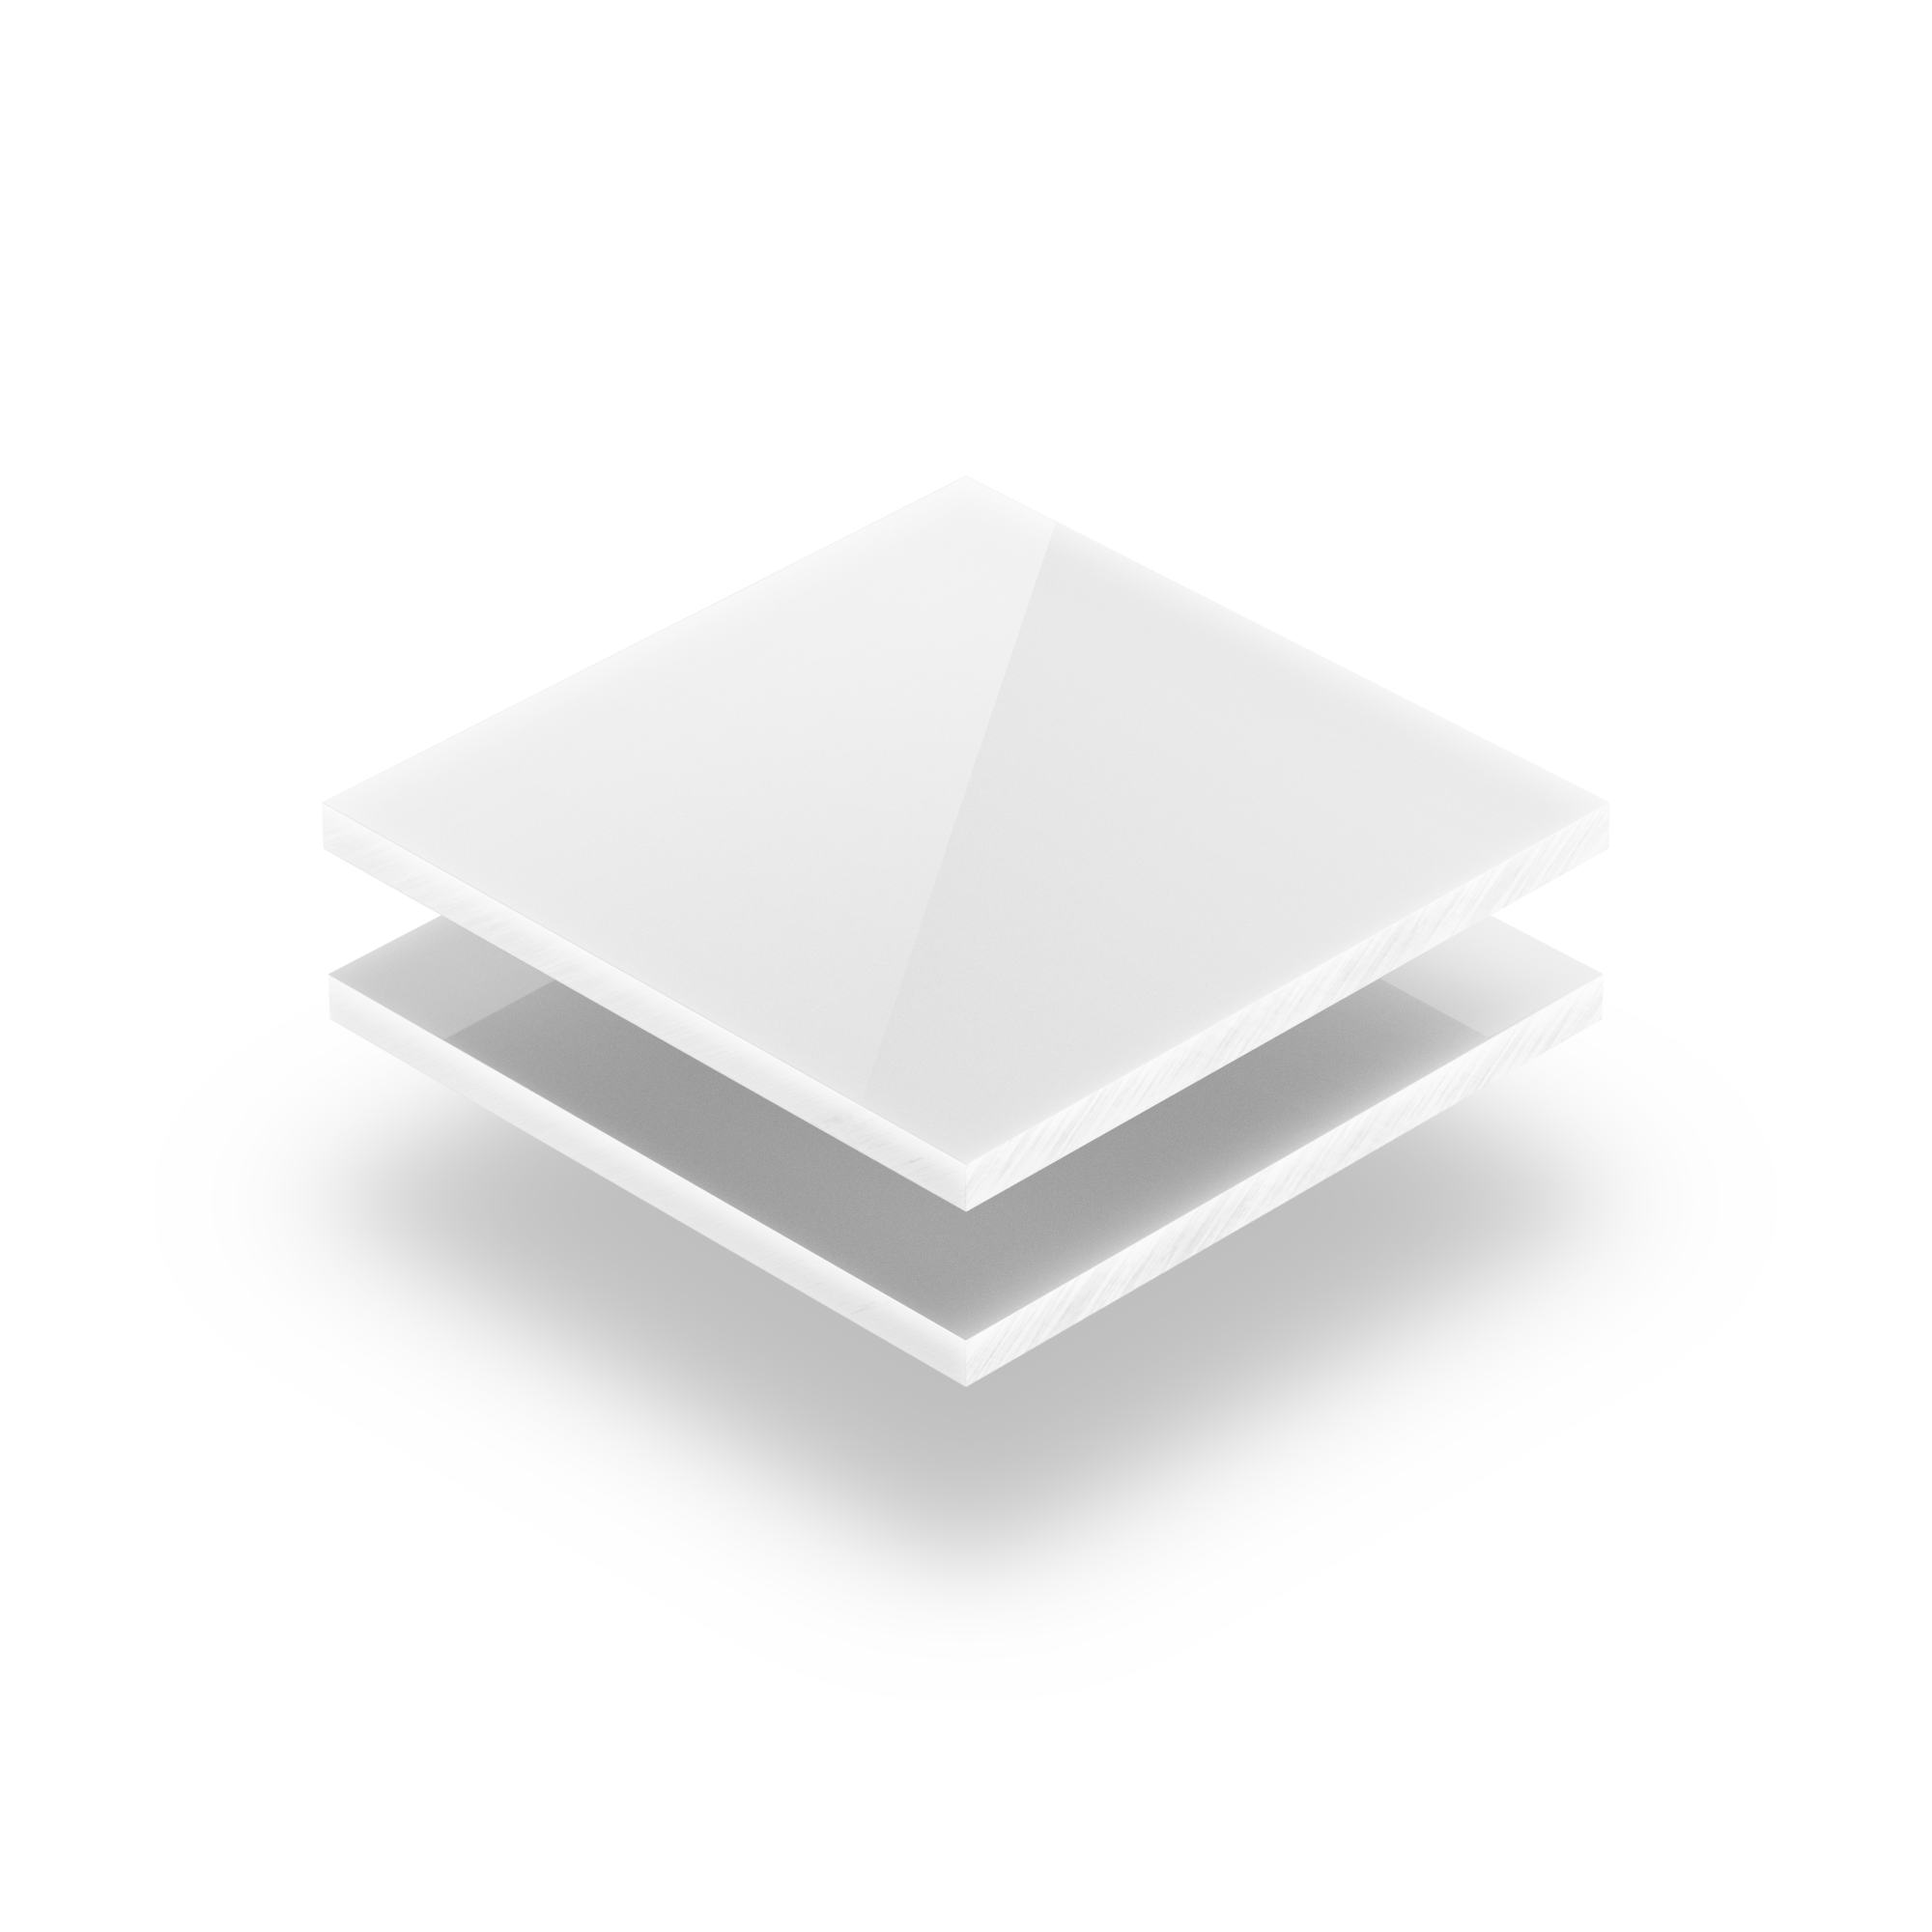 1 Hart PVC Kunststoffplatte weiß 320x210x1mm 